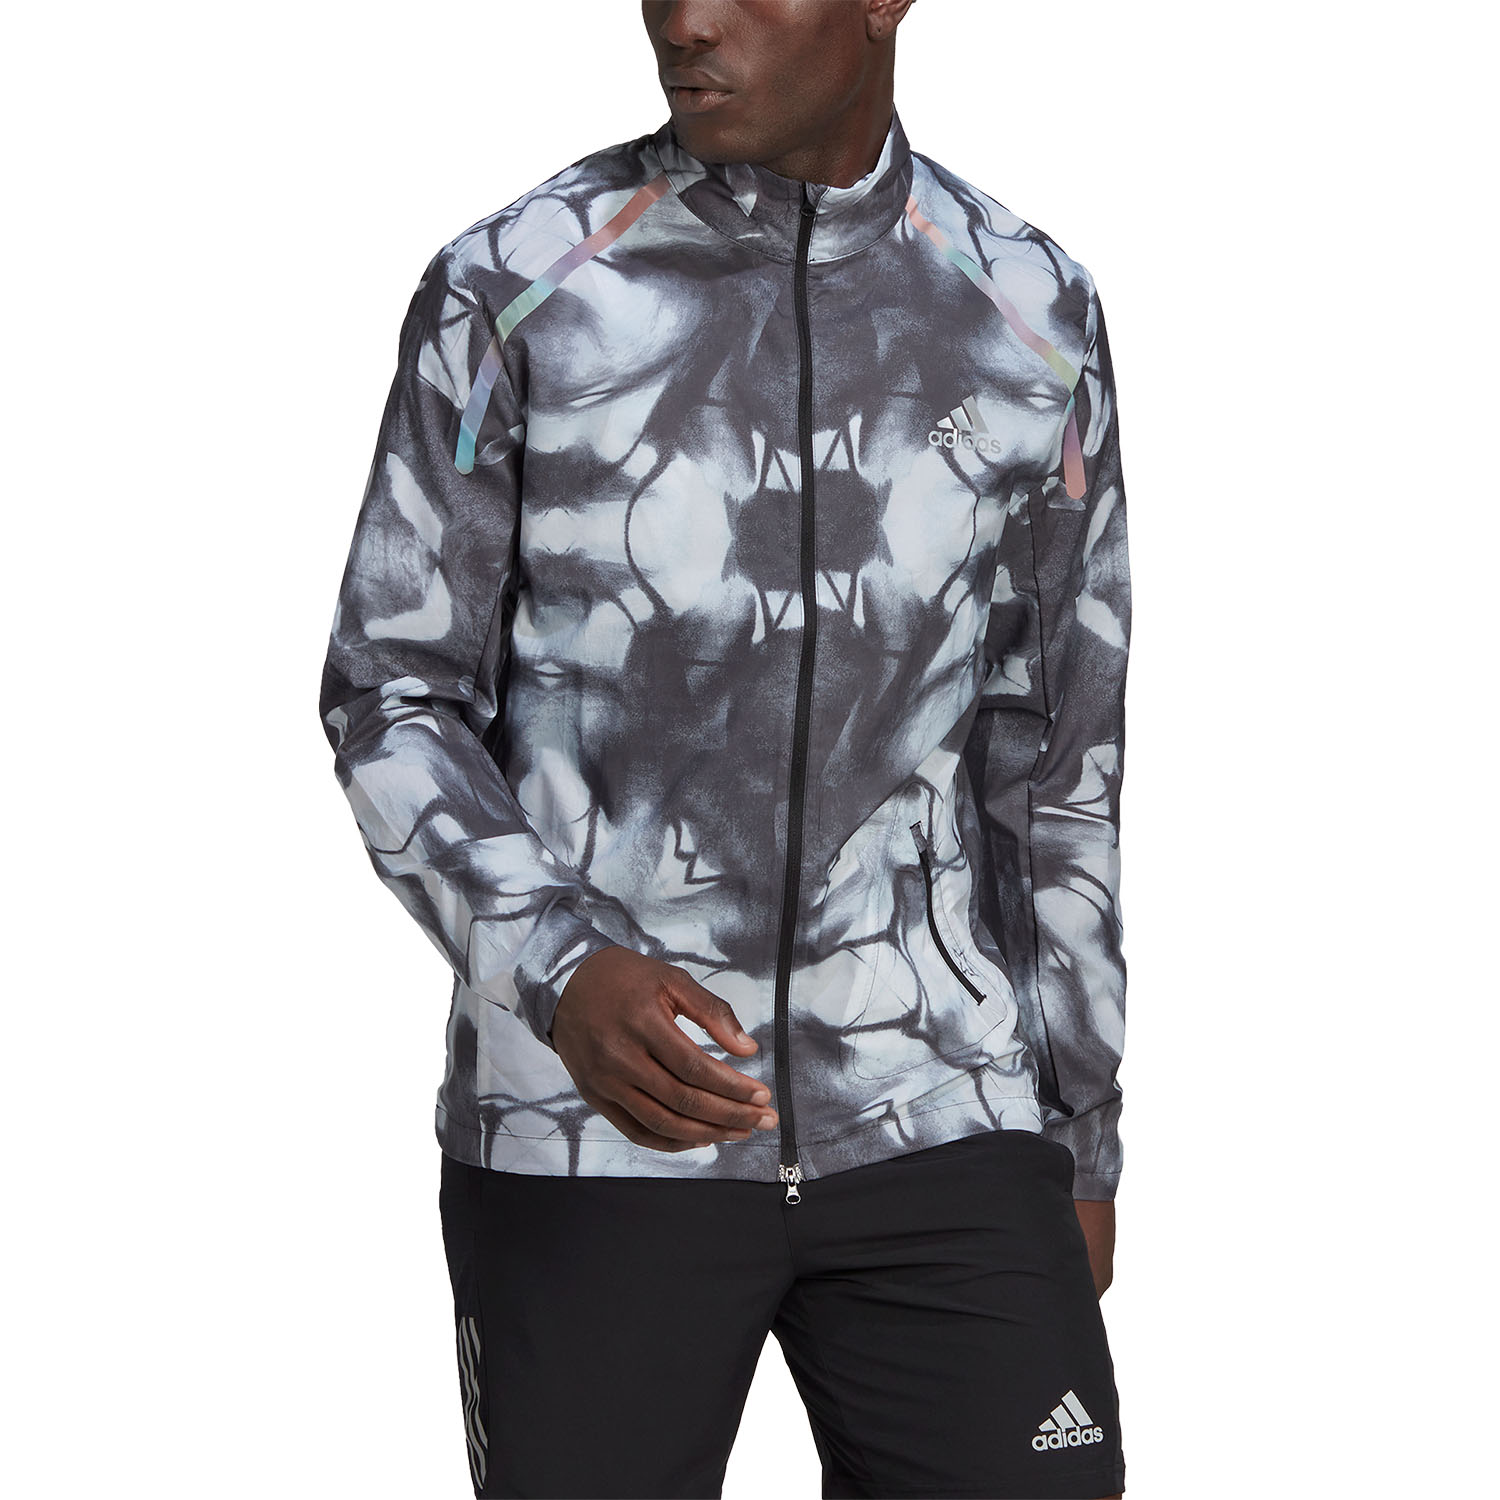 adidas Marathon Graphic Jacket - White/Carbon Print